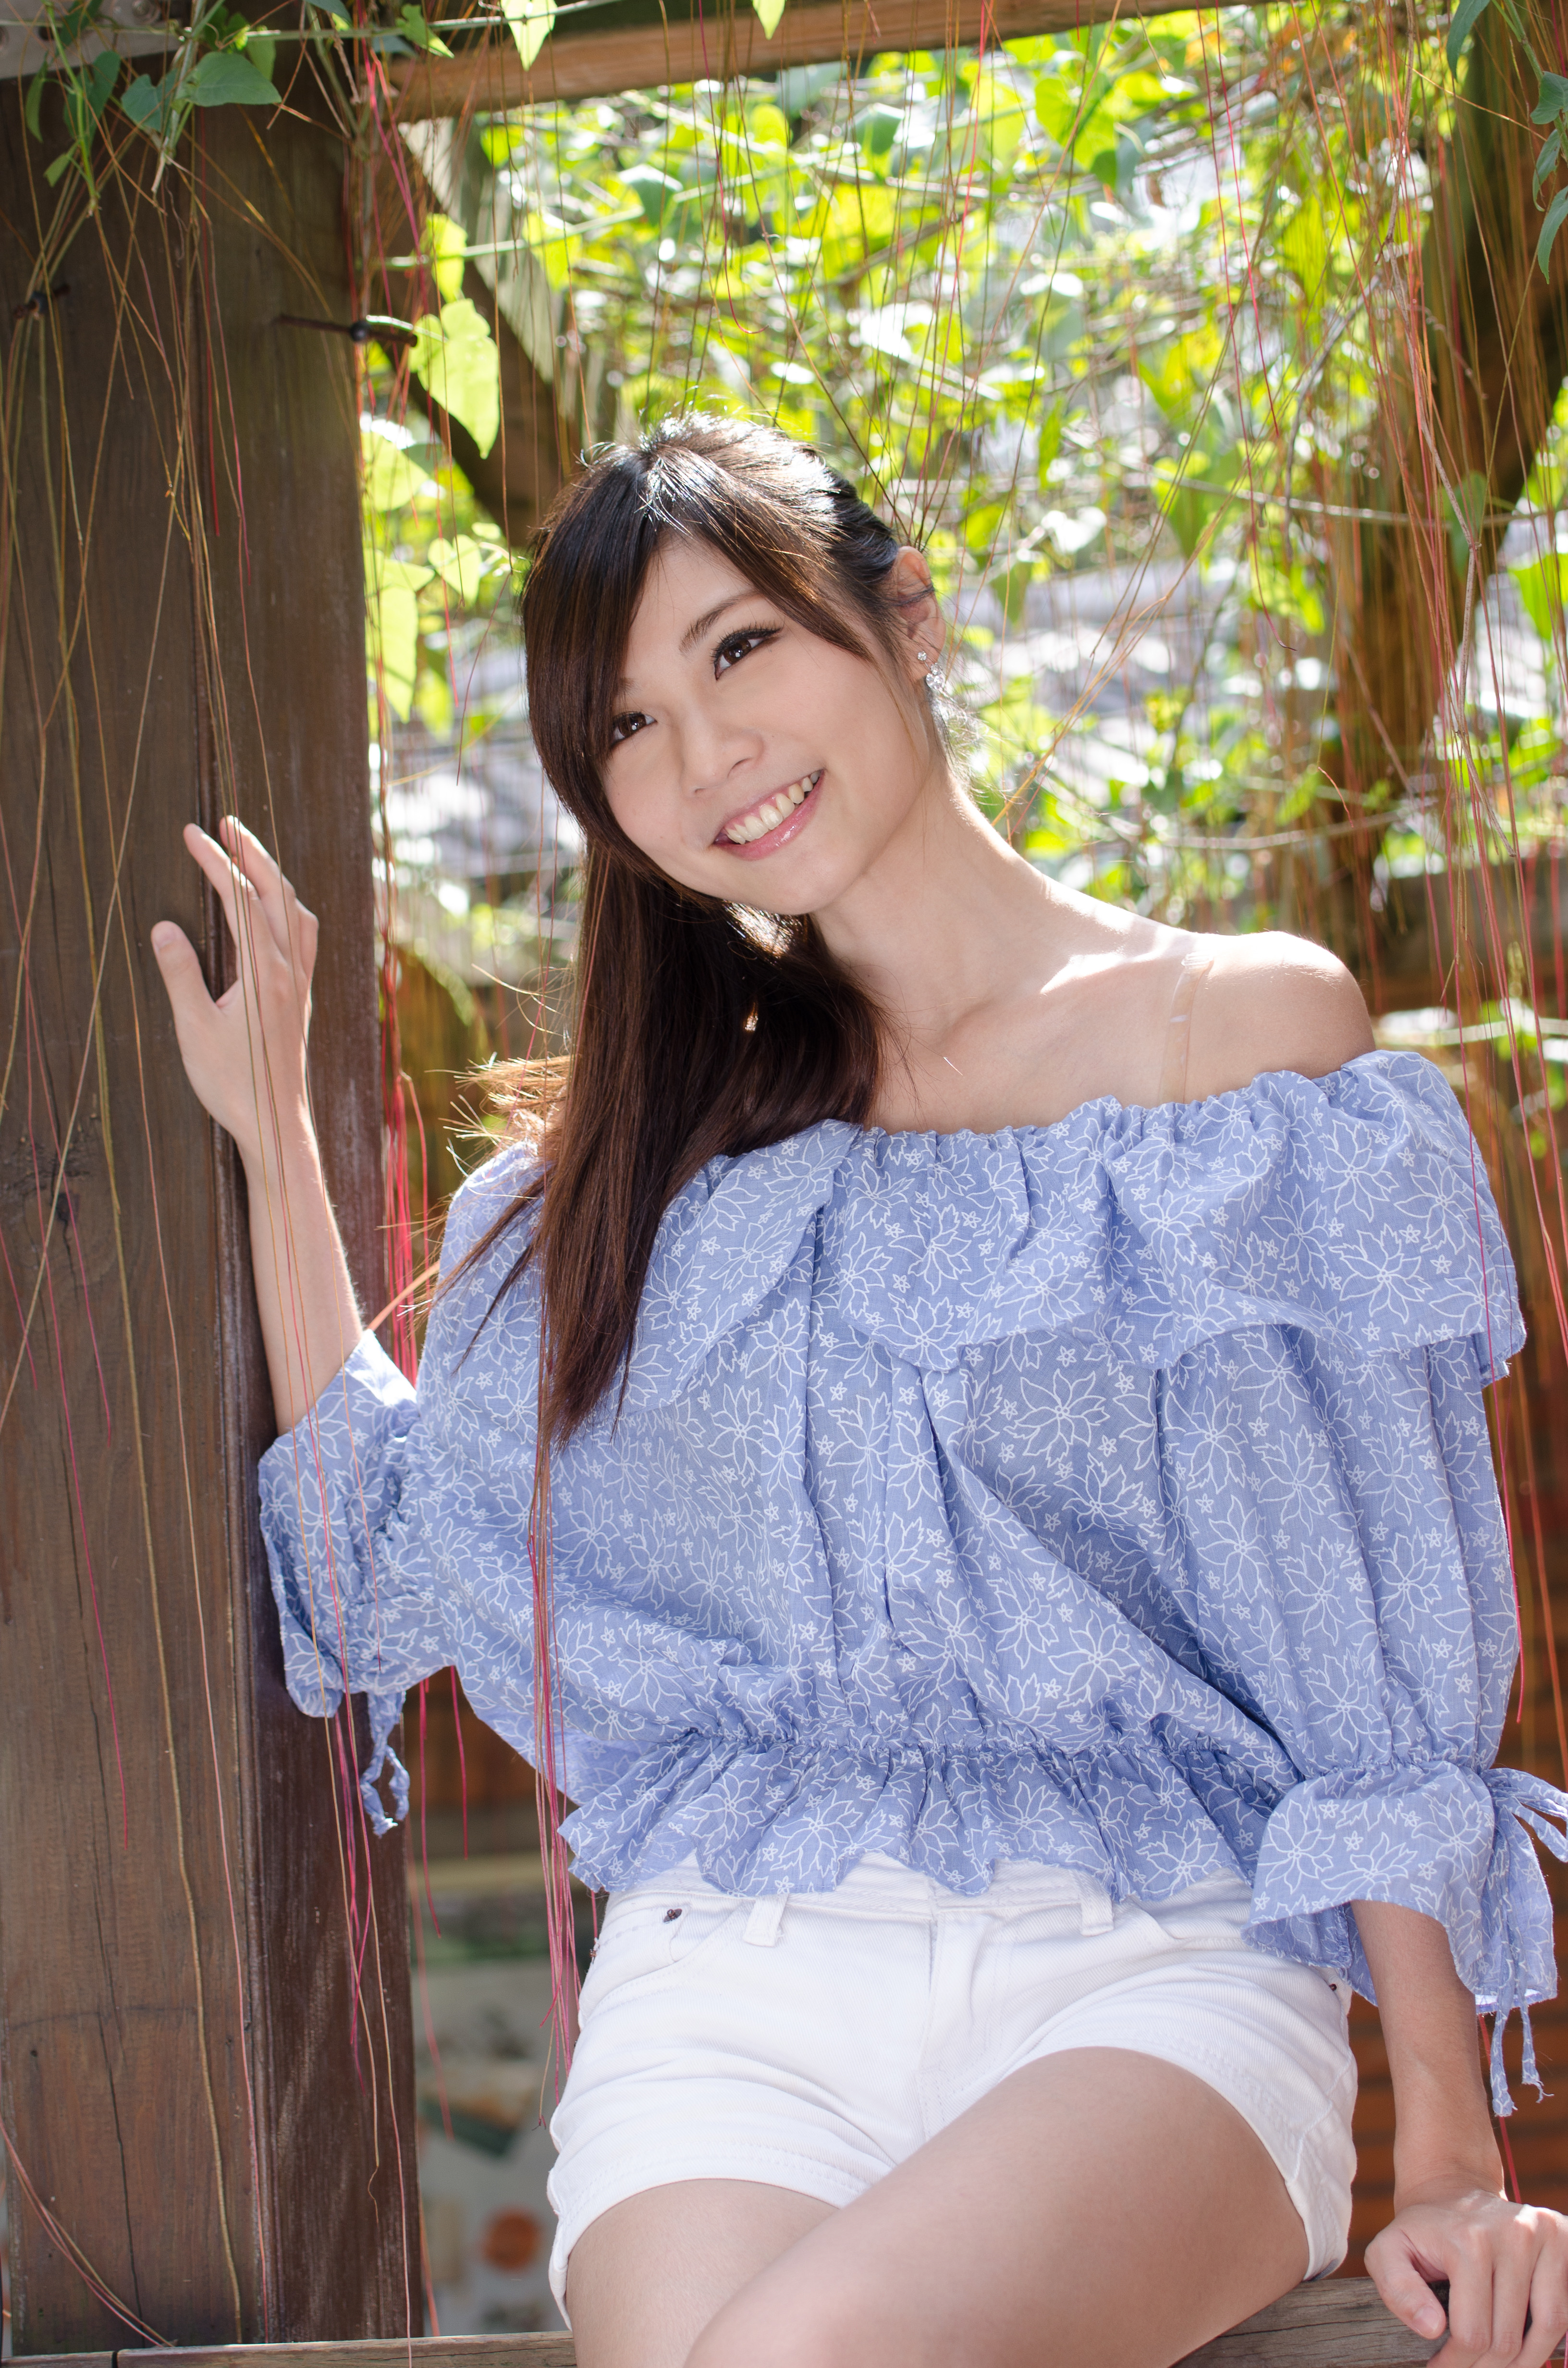 Model Asian Women Brunette Ponytail Smiling Shorts Women Outdoors Portrait Display Robin Huang 3264x4928